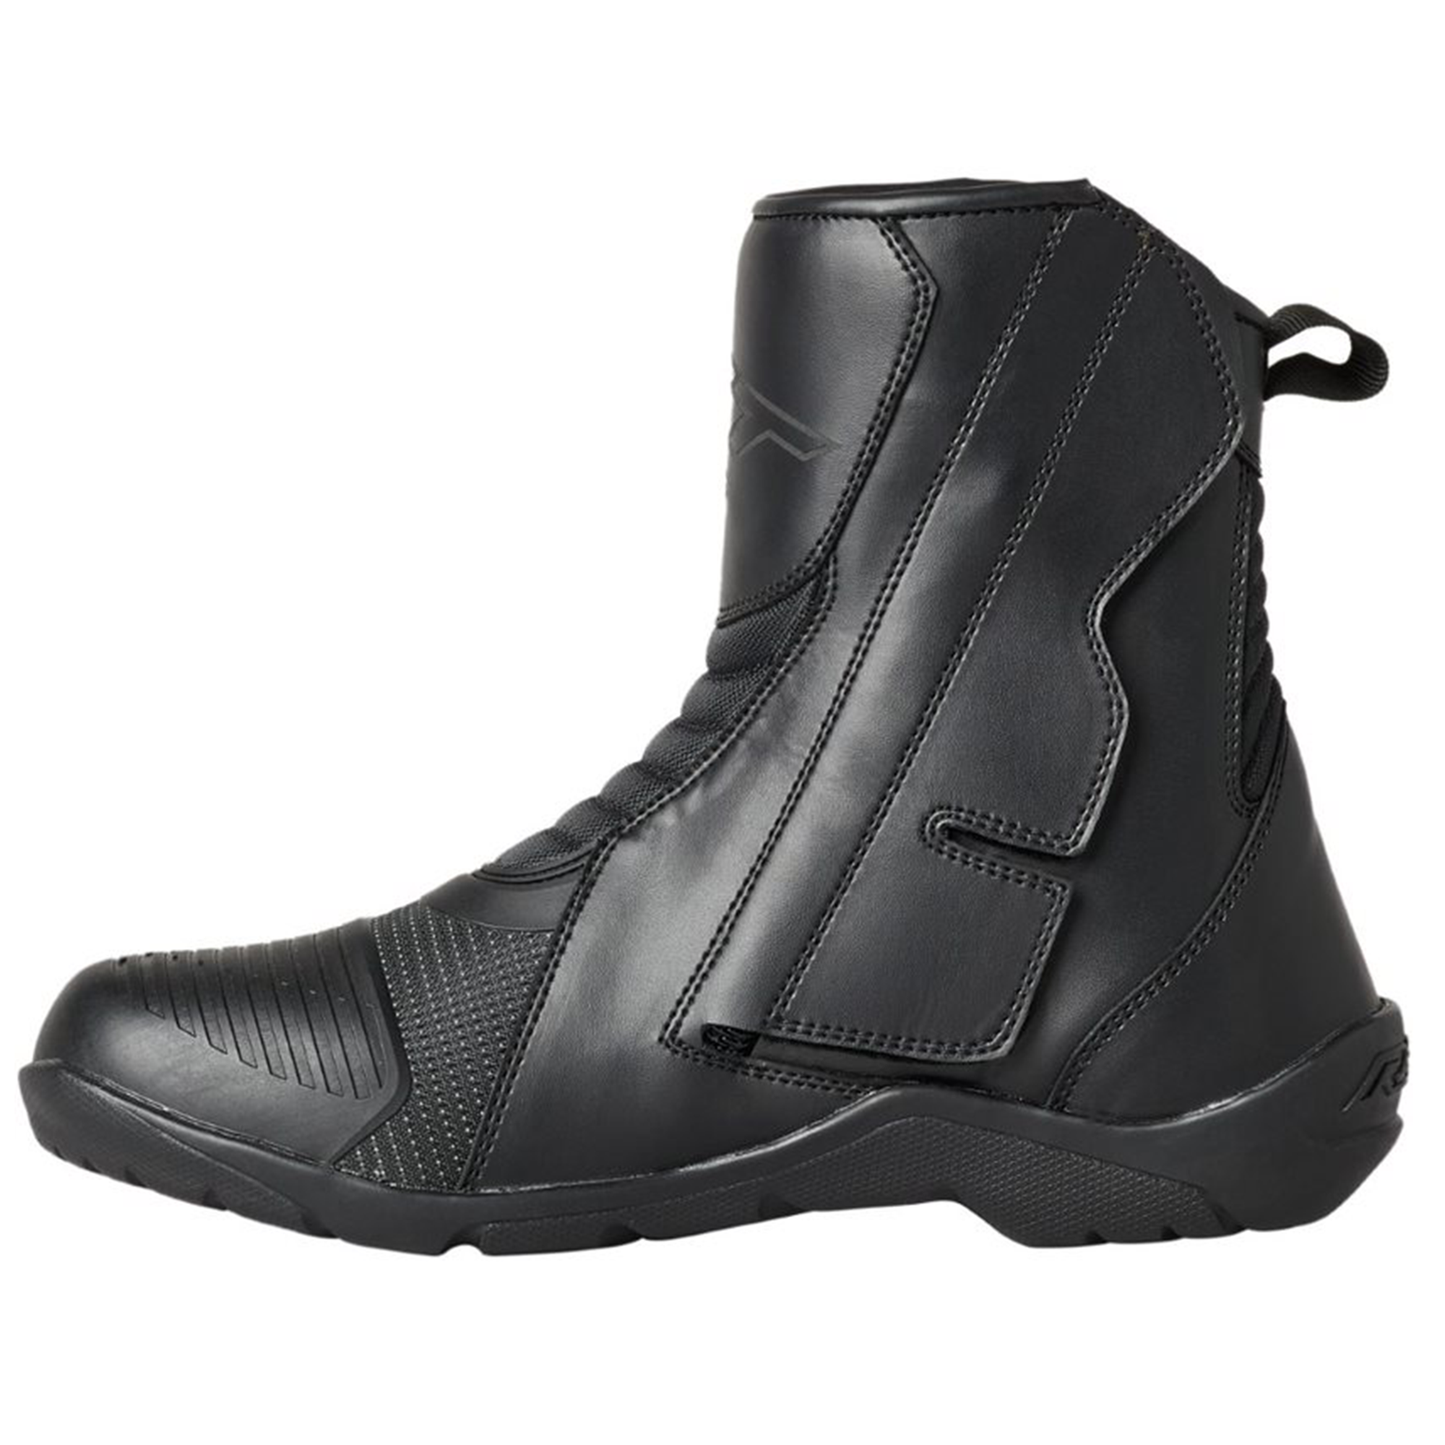 RST Atlas Mid Waterproof Men's Boots - Black